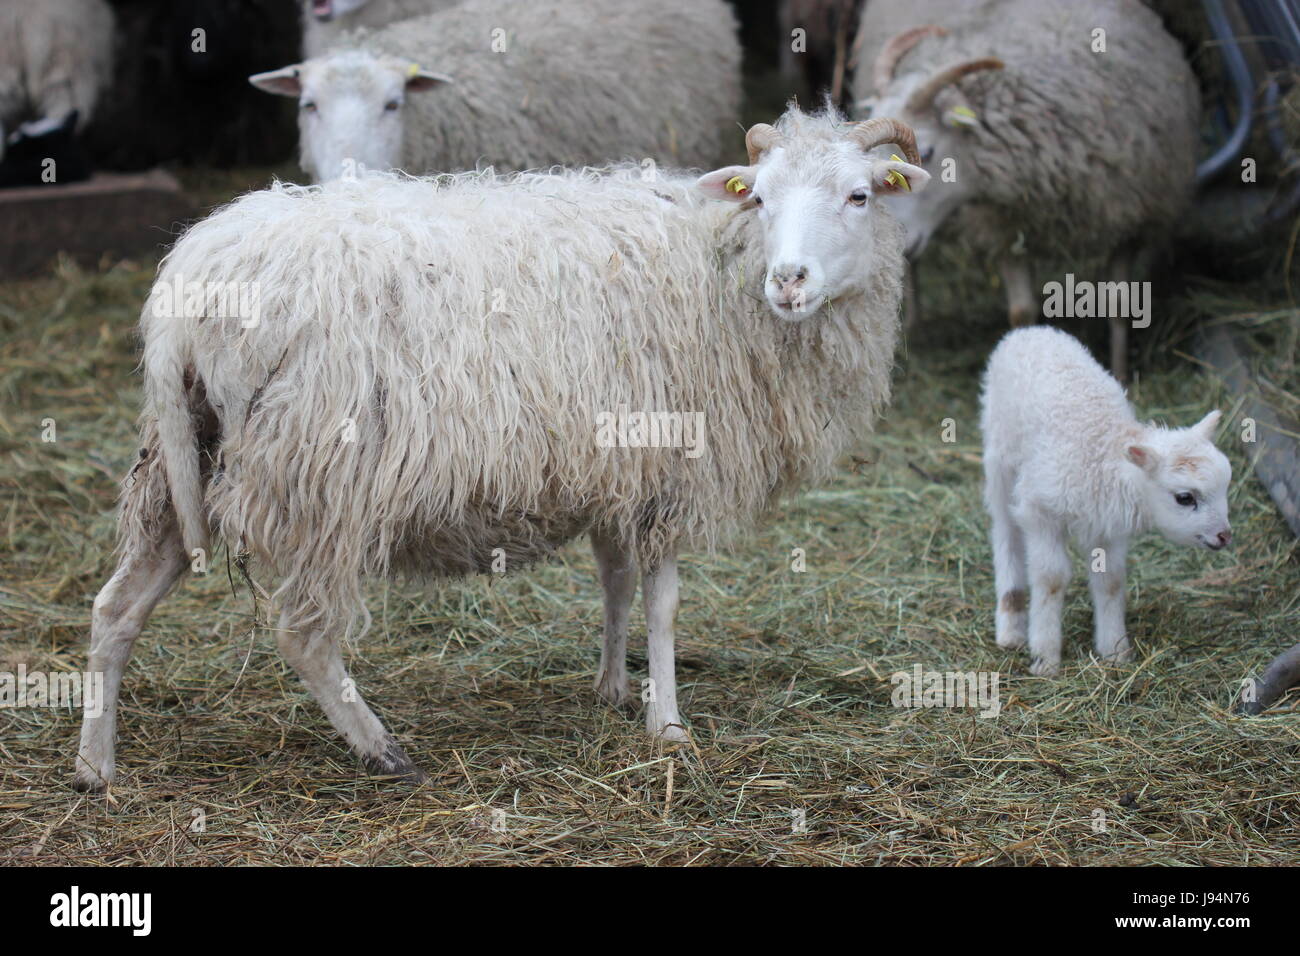 zoo, blank, european, caucasian, sheep, wool, small, tiny, little, short, Stock Photo